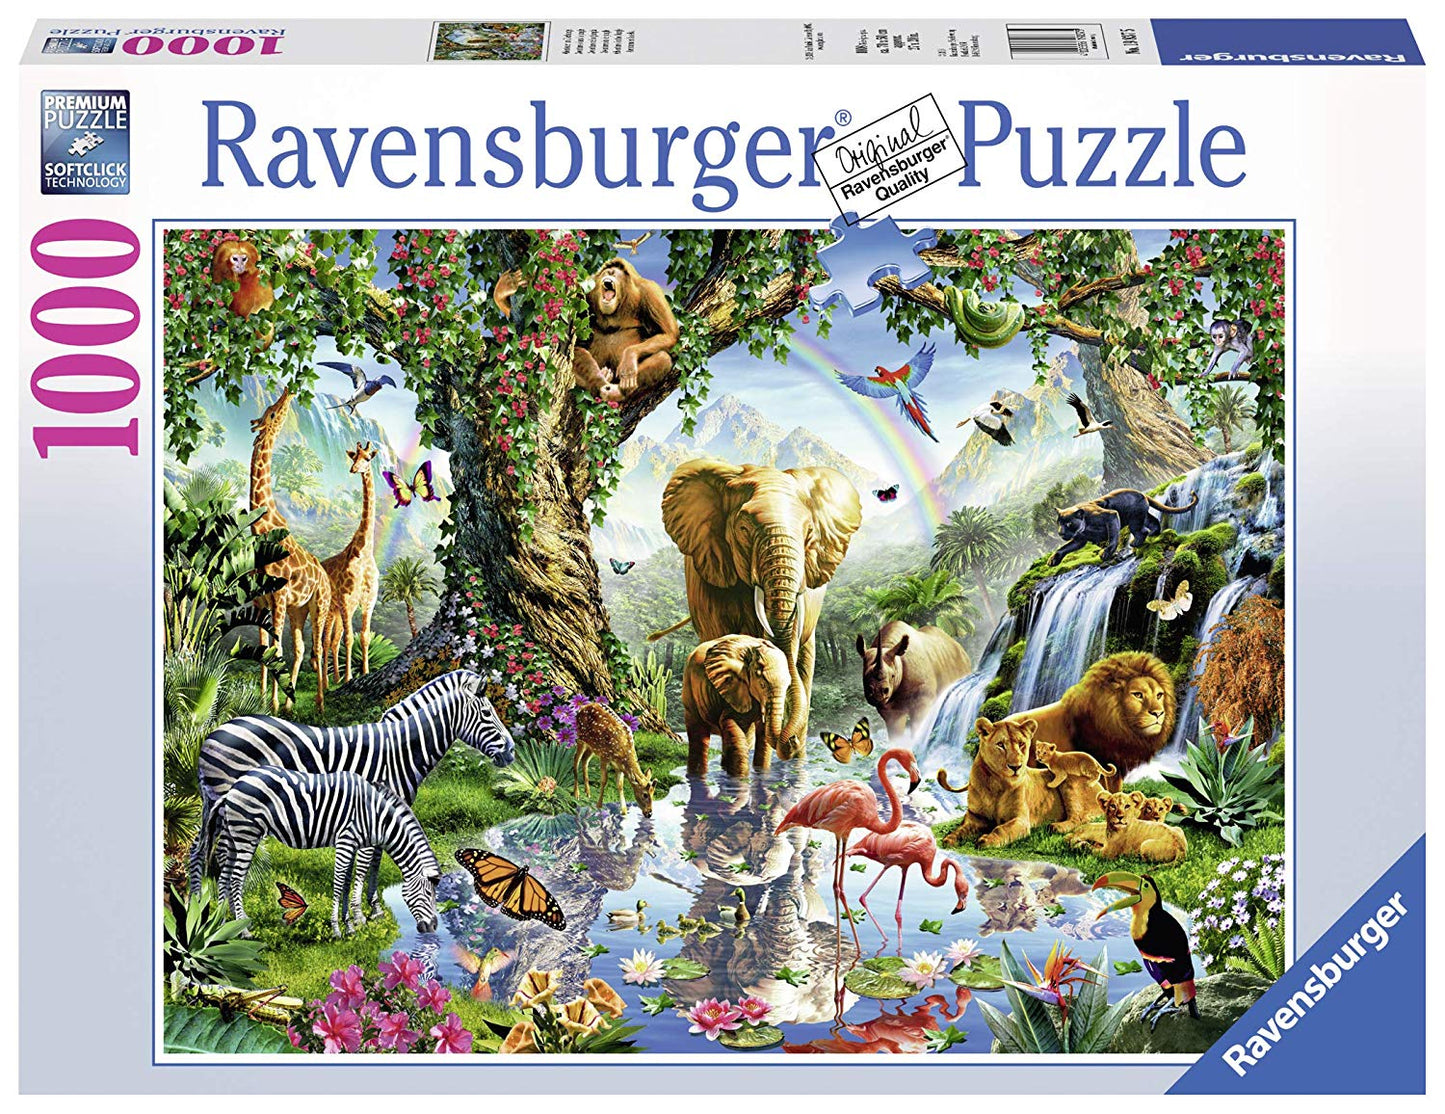 Adventures in the Jungle by Jan Patrik, 1000 Piece Puzzle